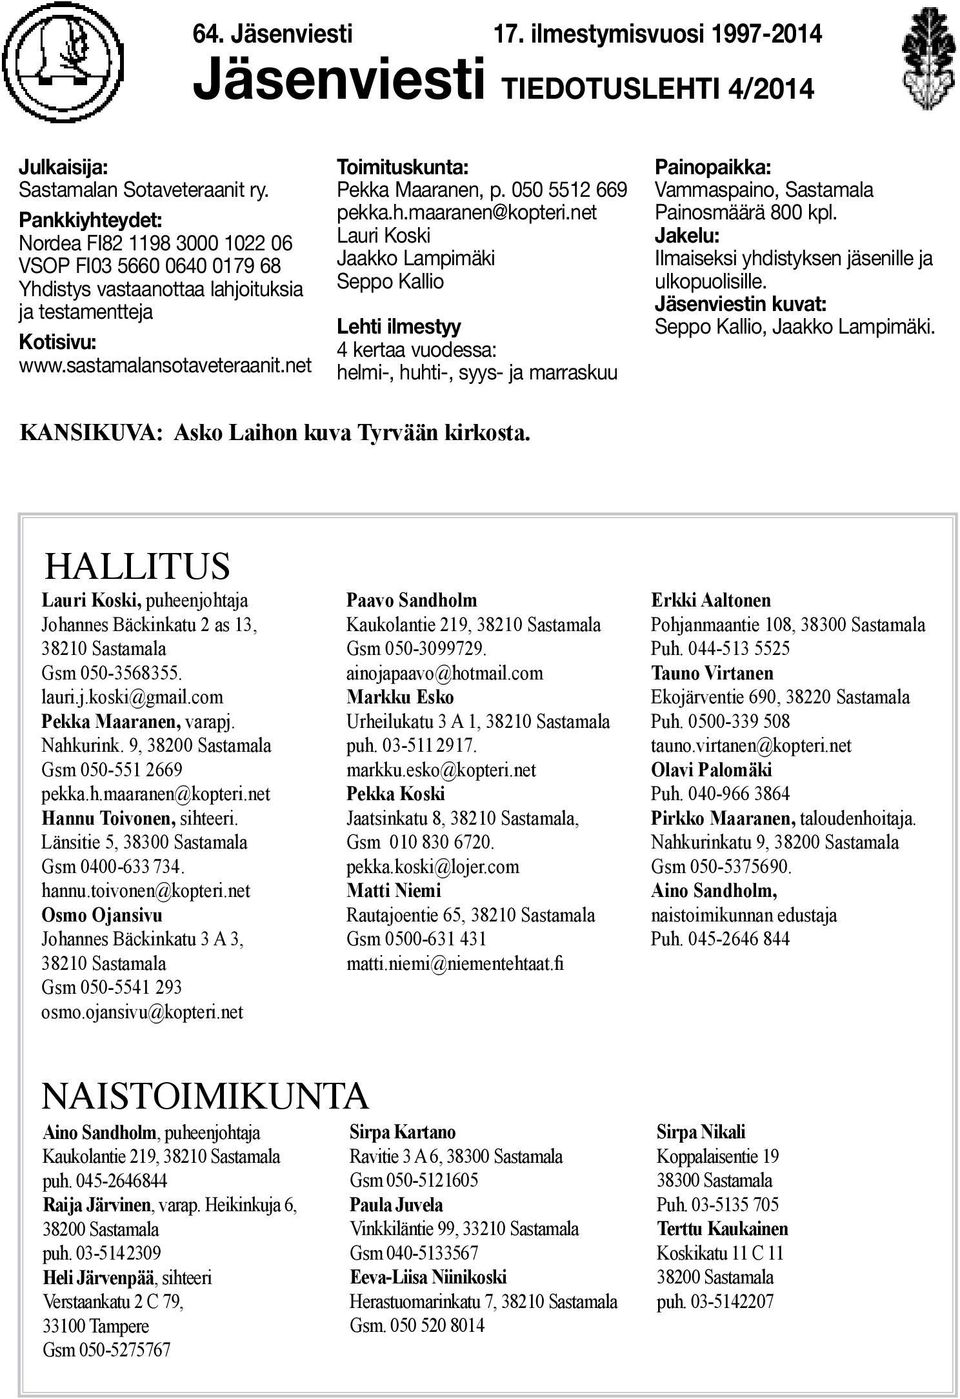 net Toimituskunta: Pekka Maaranen, p. 050 5512 669 pekka.h.maaranen@kopteri.